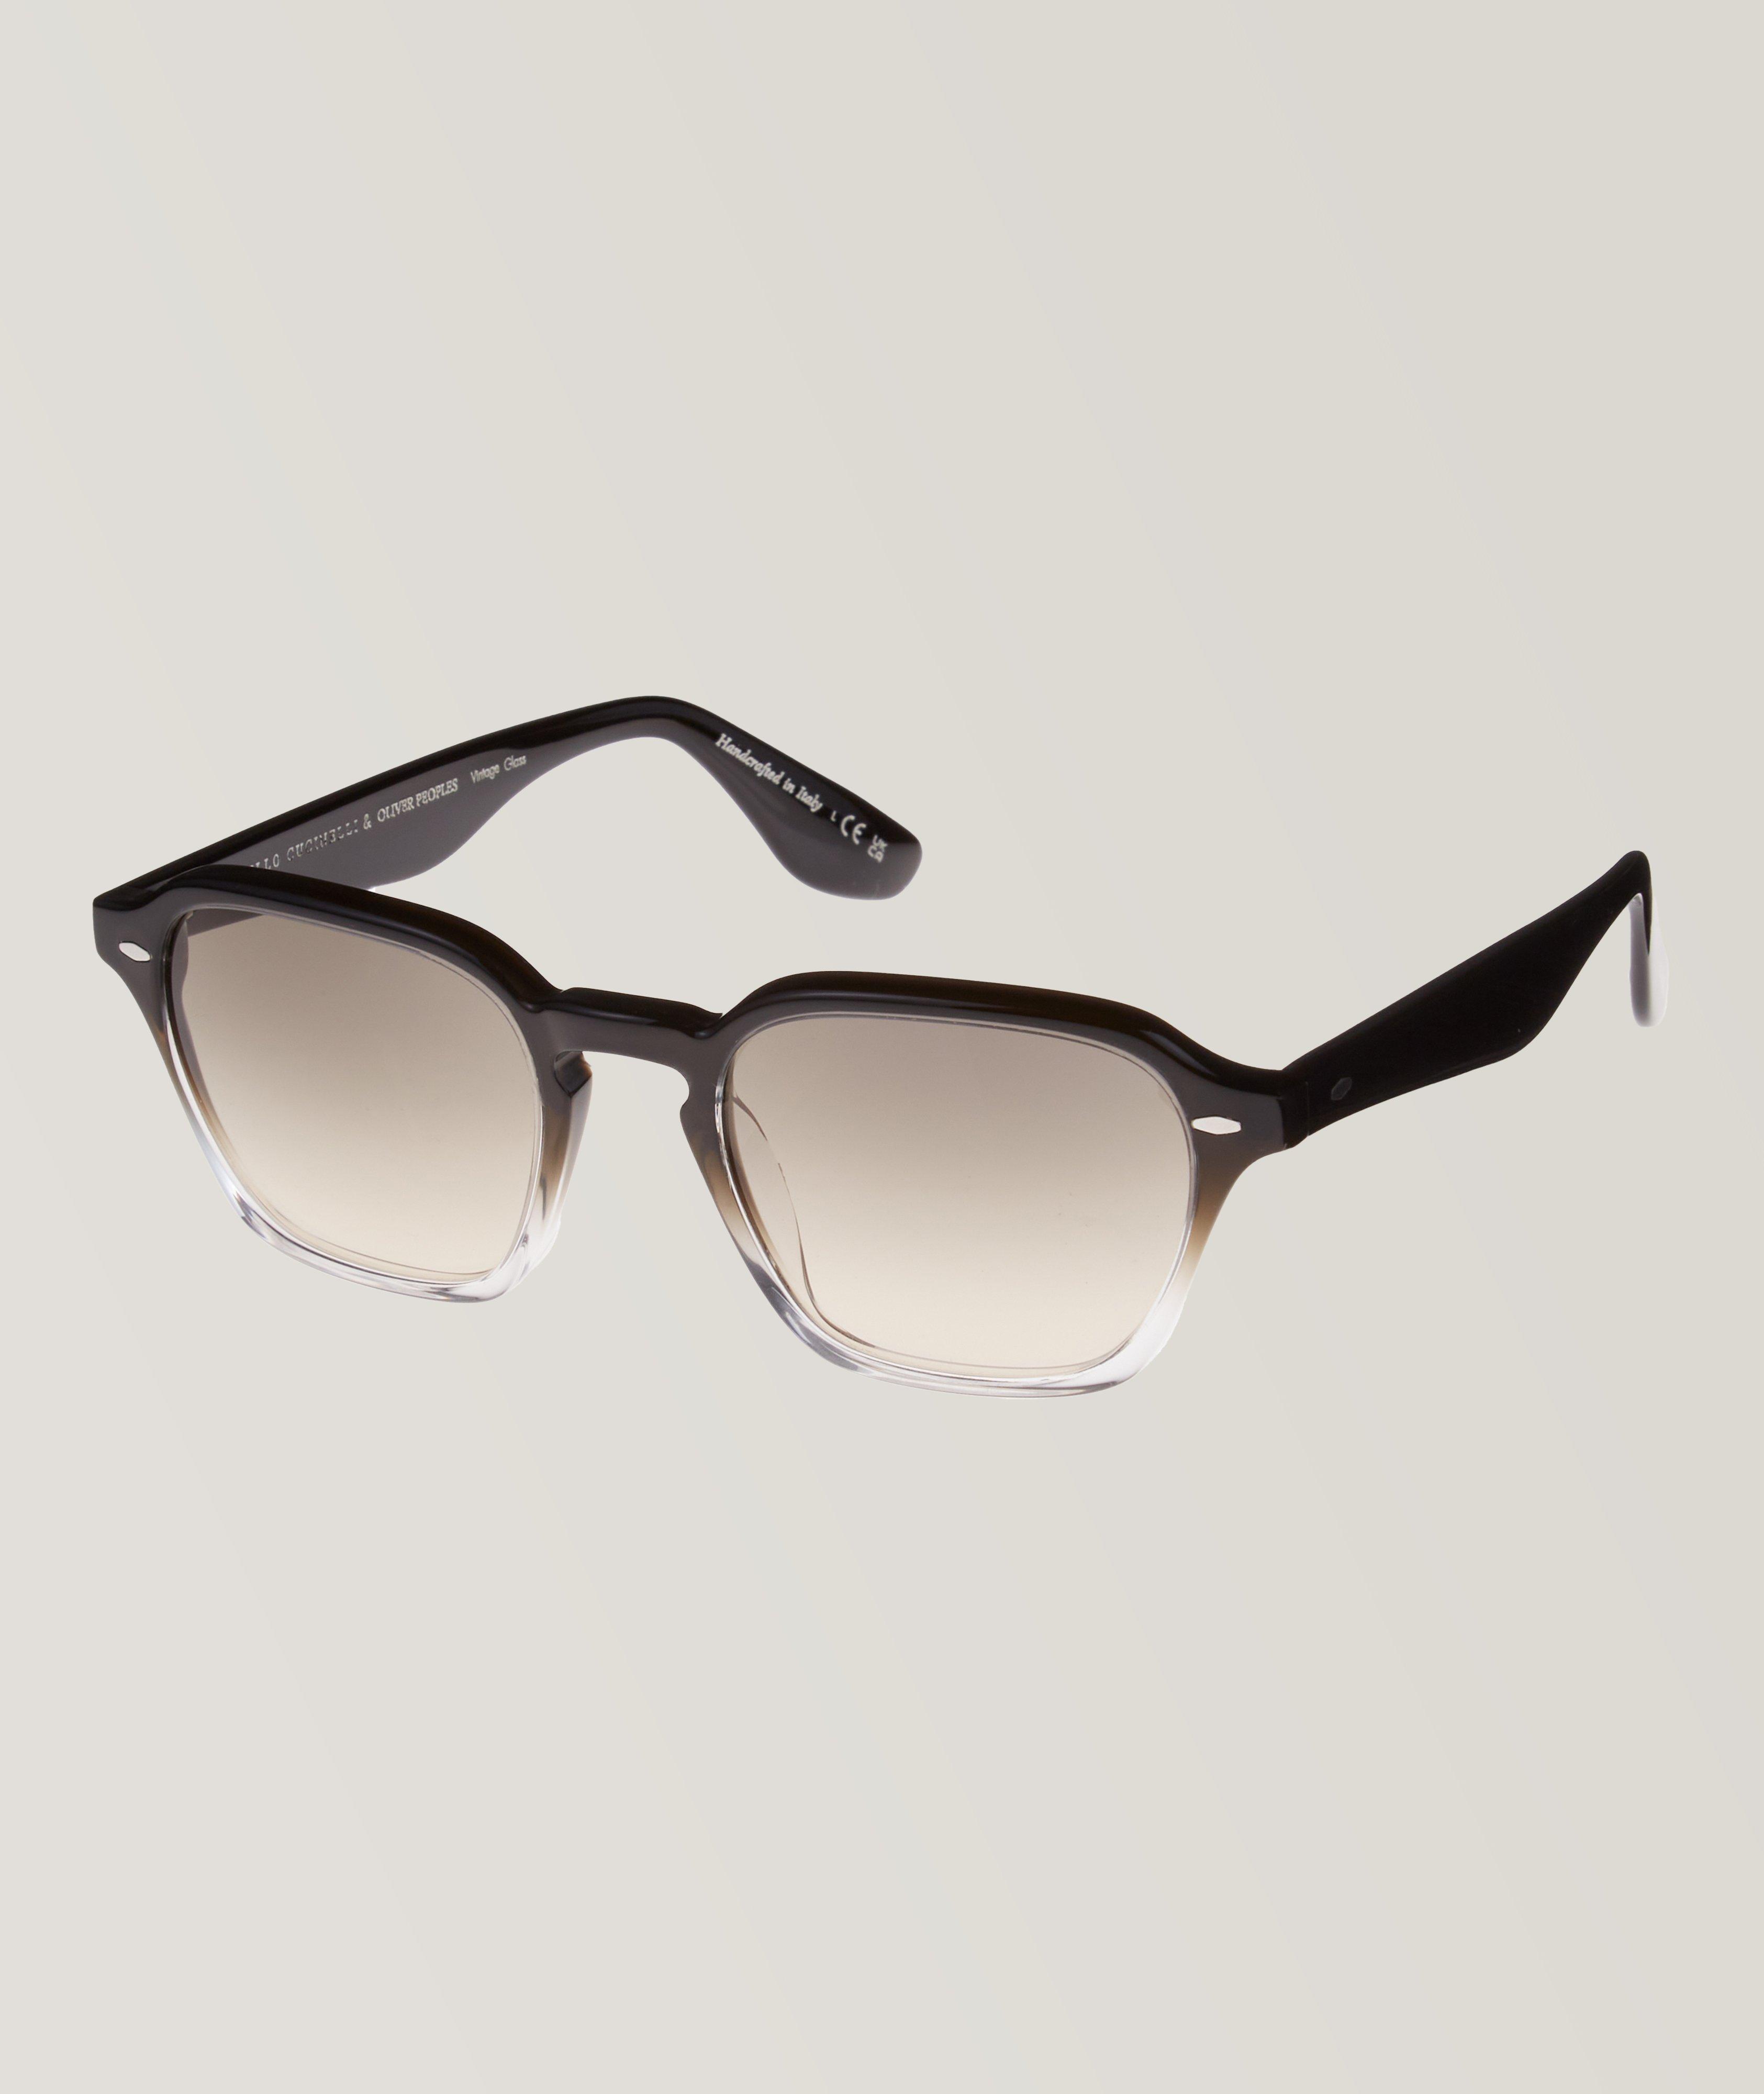 Griffo Square Frame Sunglasses